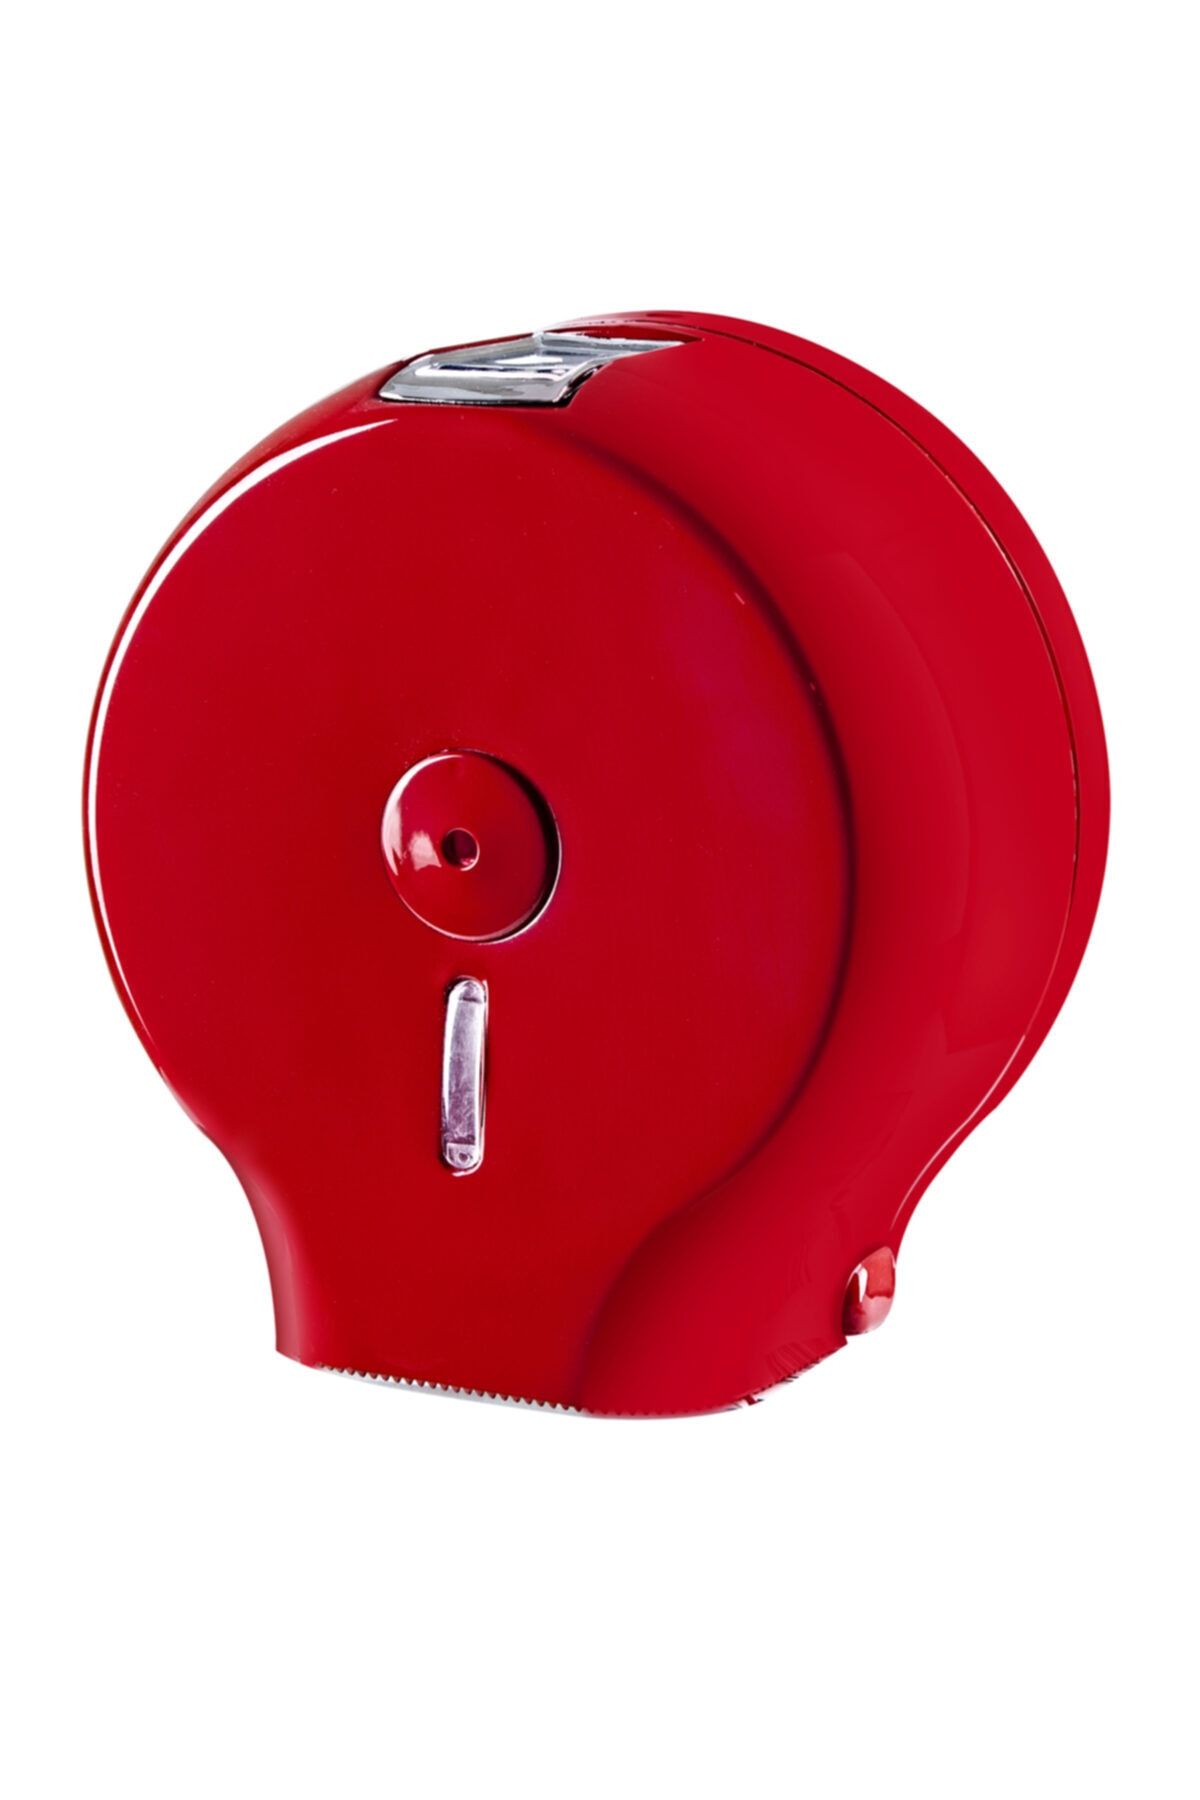 Palex (ün-ev) Jumbo Tuvalet Kağıtlığı (tuvalet Kağıdı Dispenseri)kırmızı 3444-b